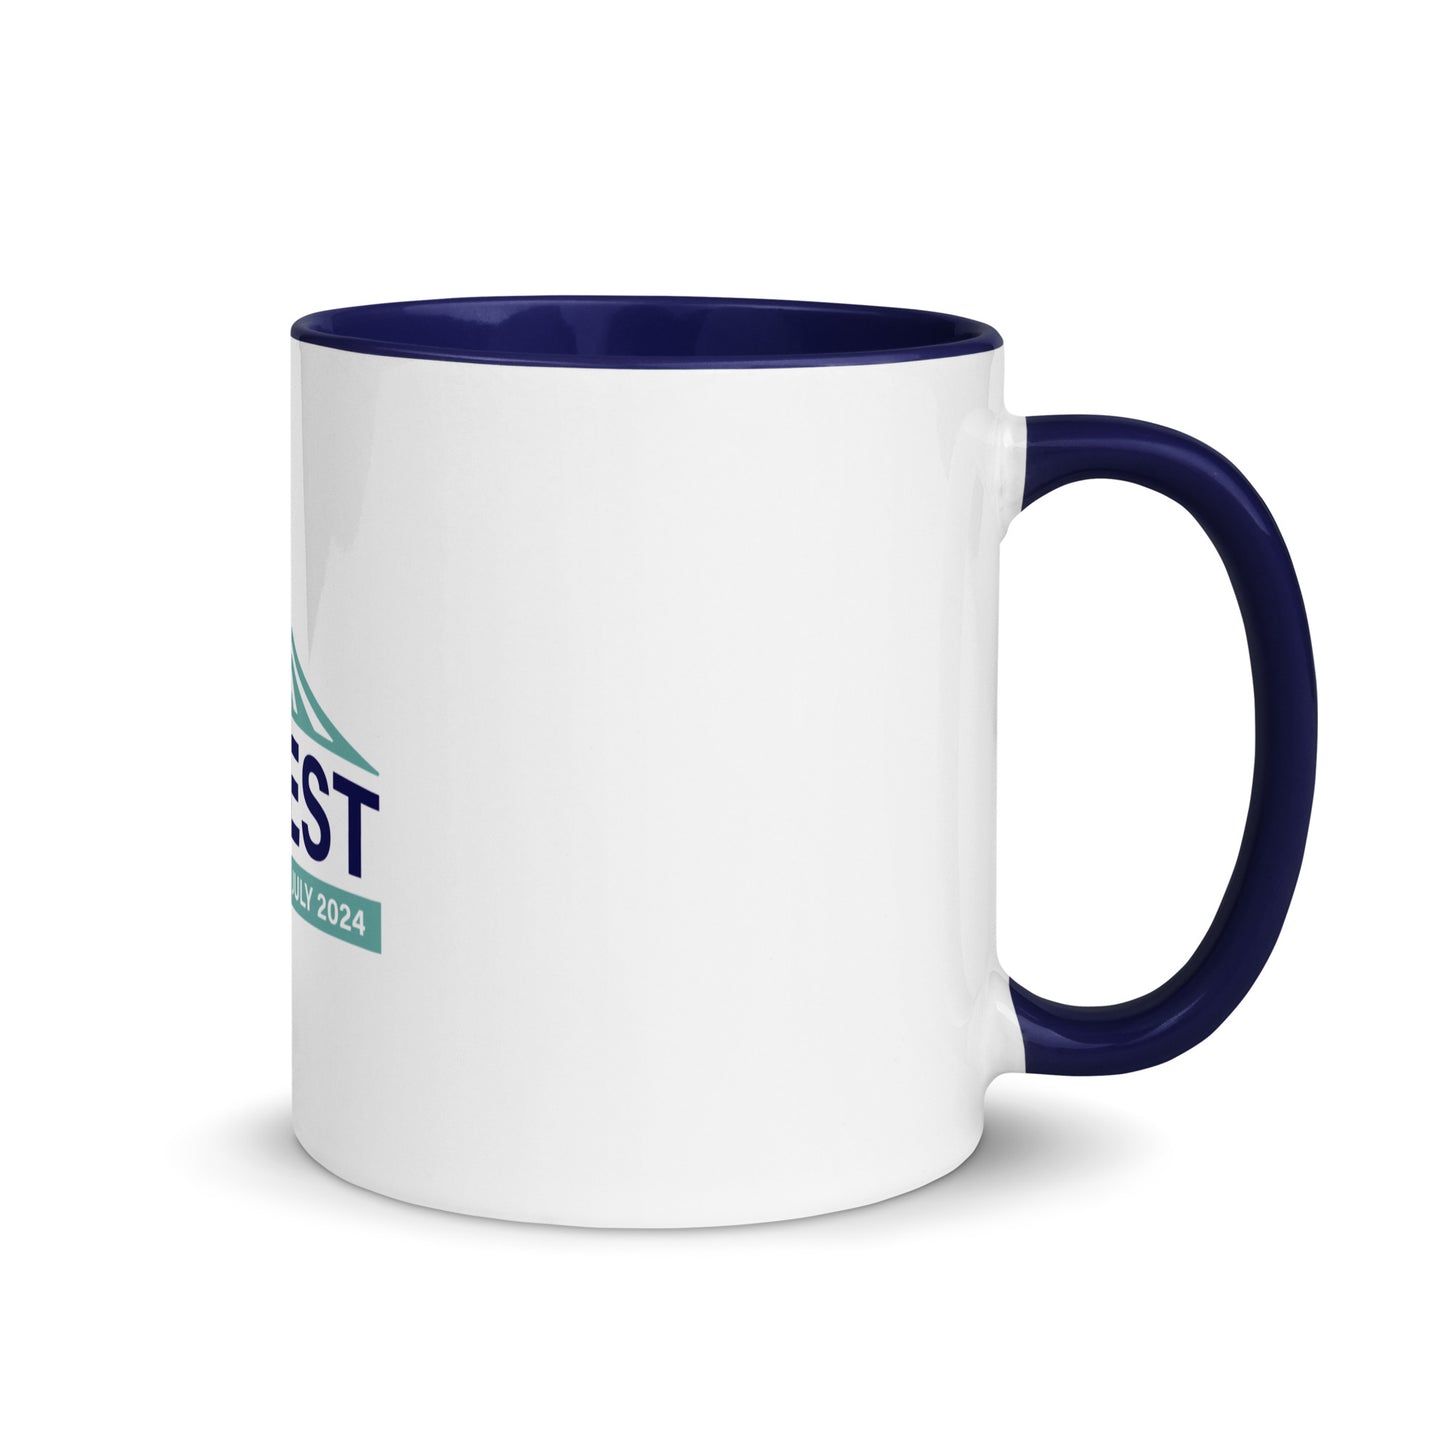 RecFest UK Logo Mug